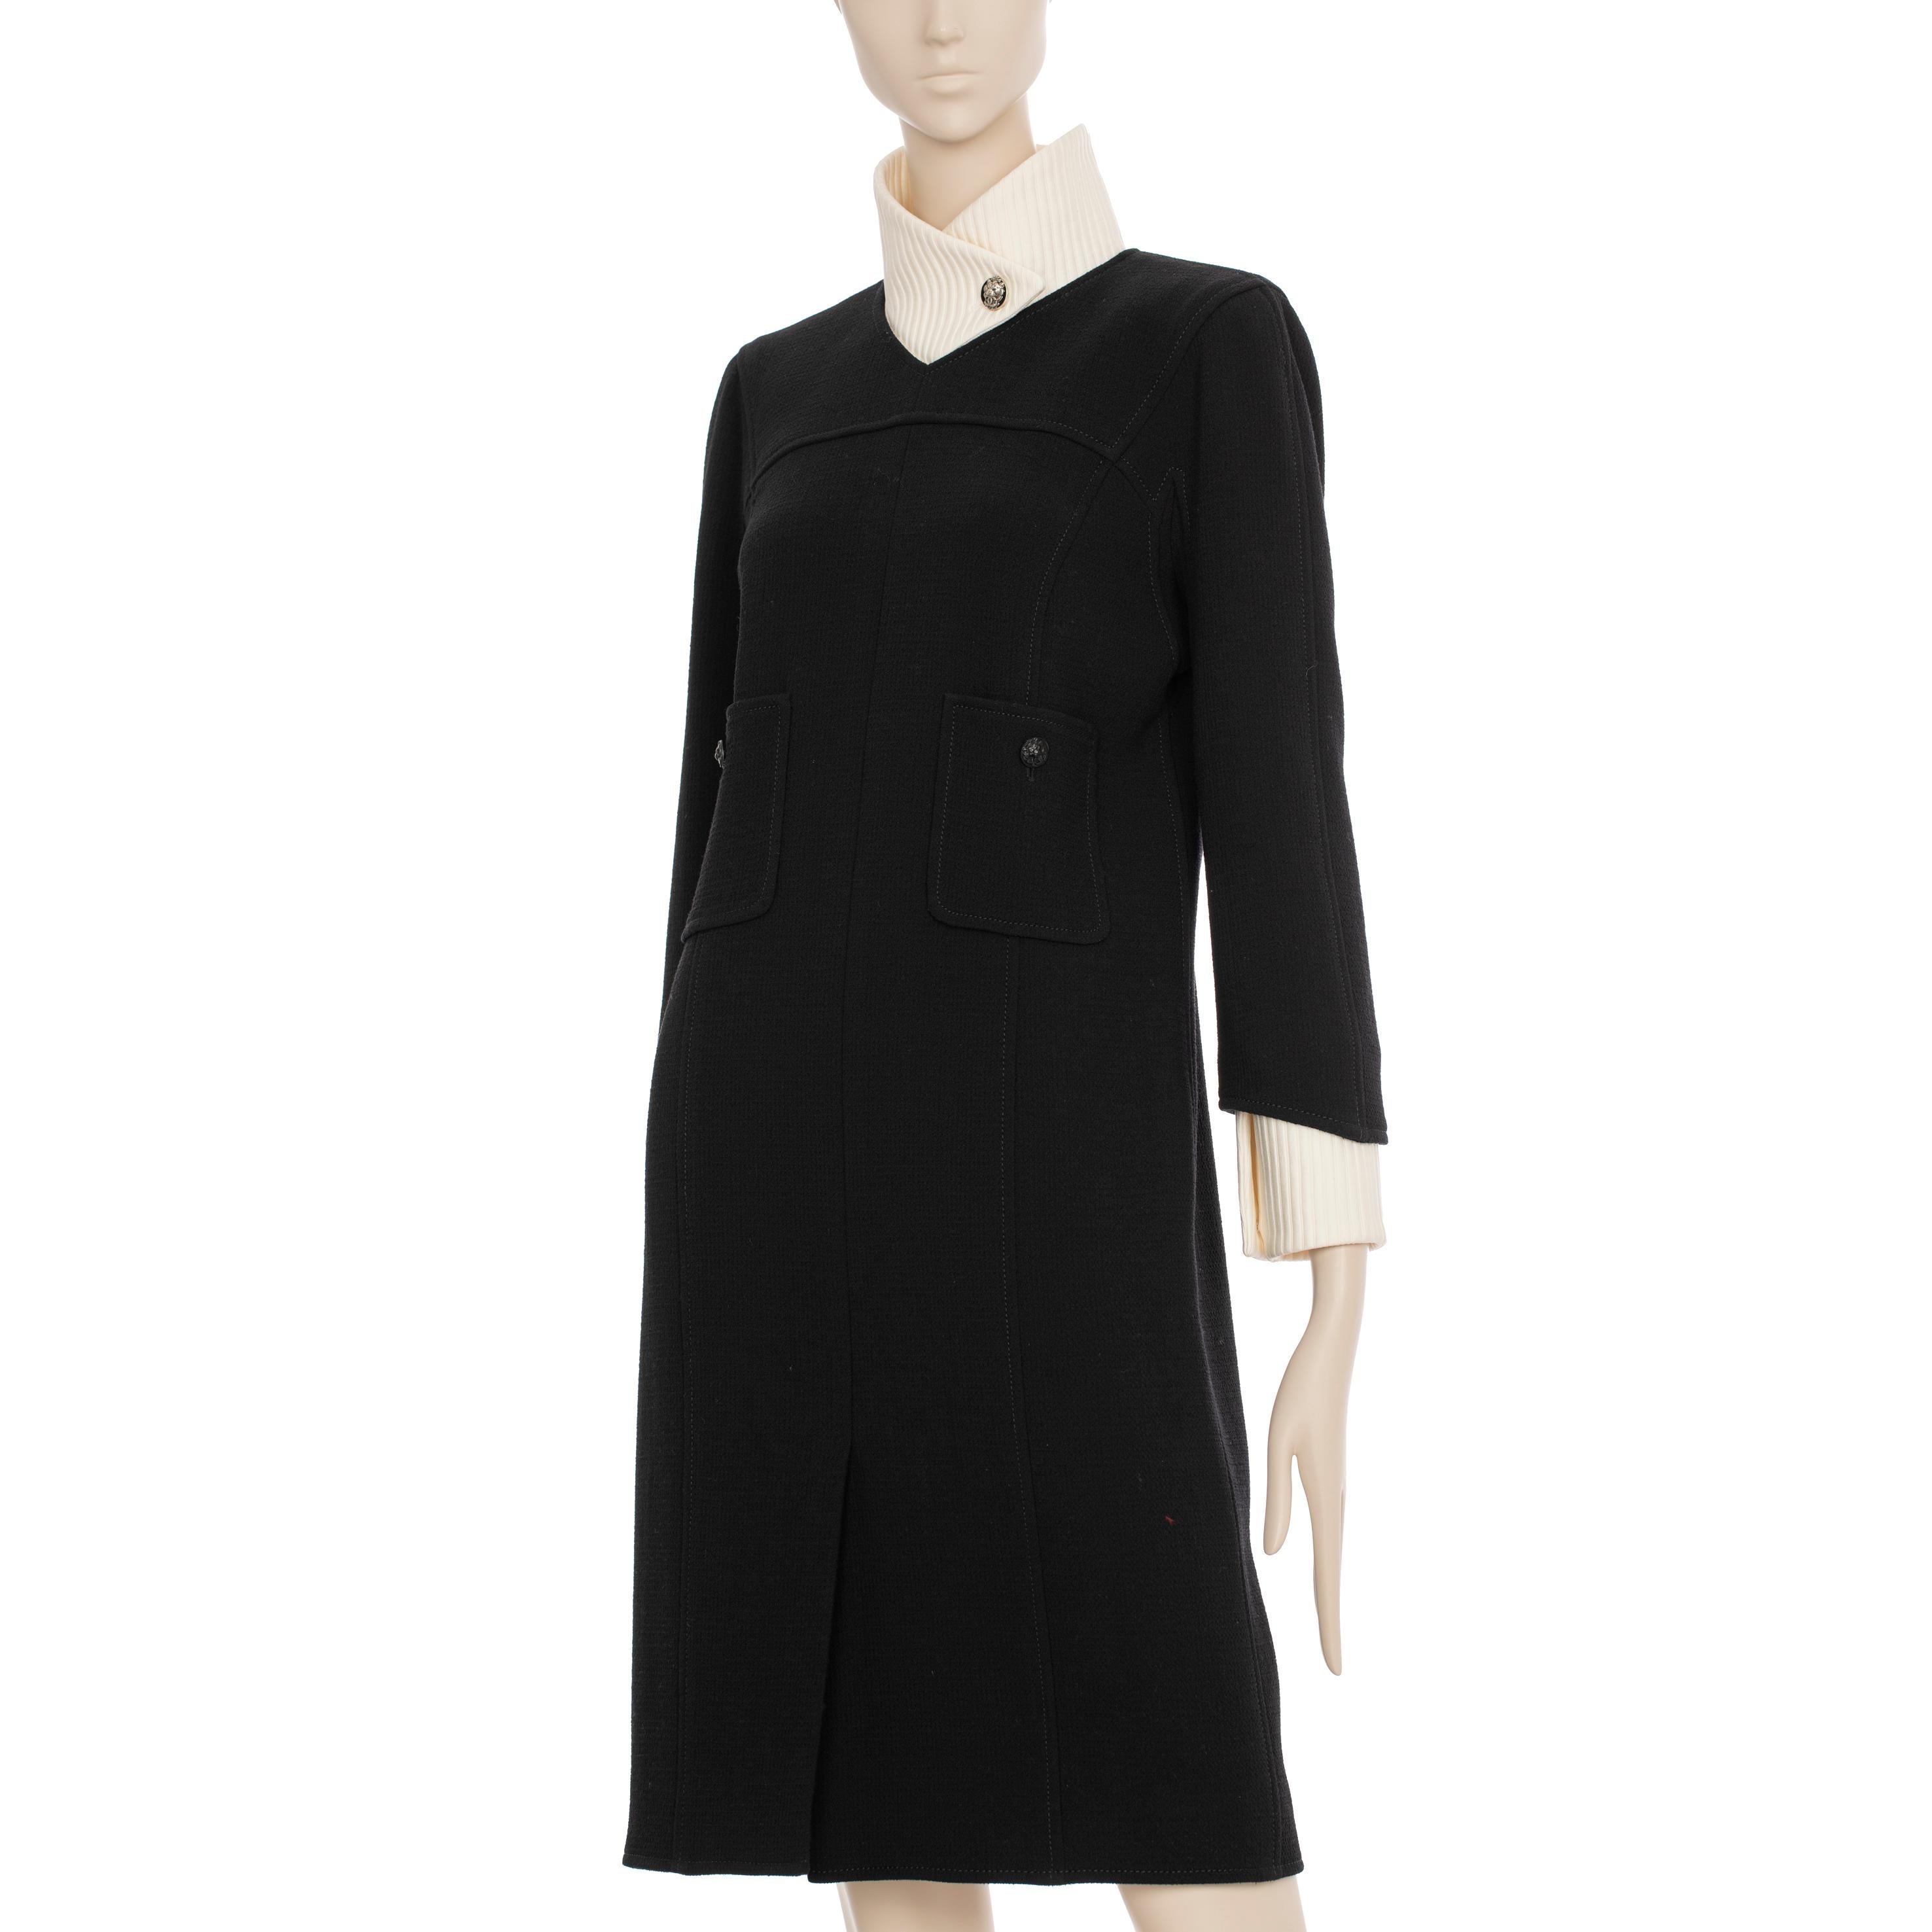 Chanel Long Black Dress With Detachable Collar & Cuff 40 FR 8